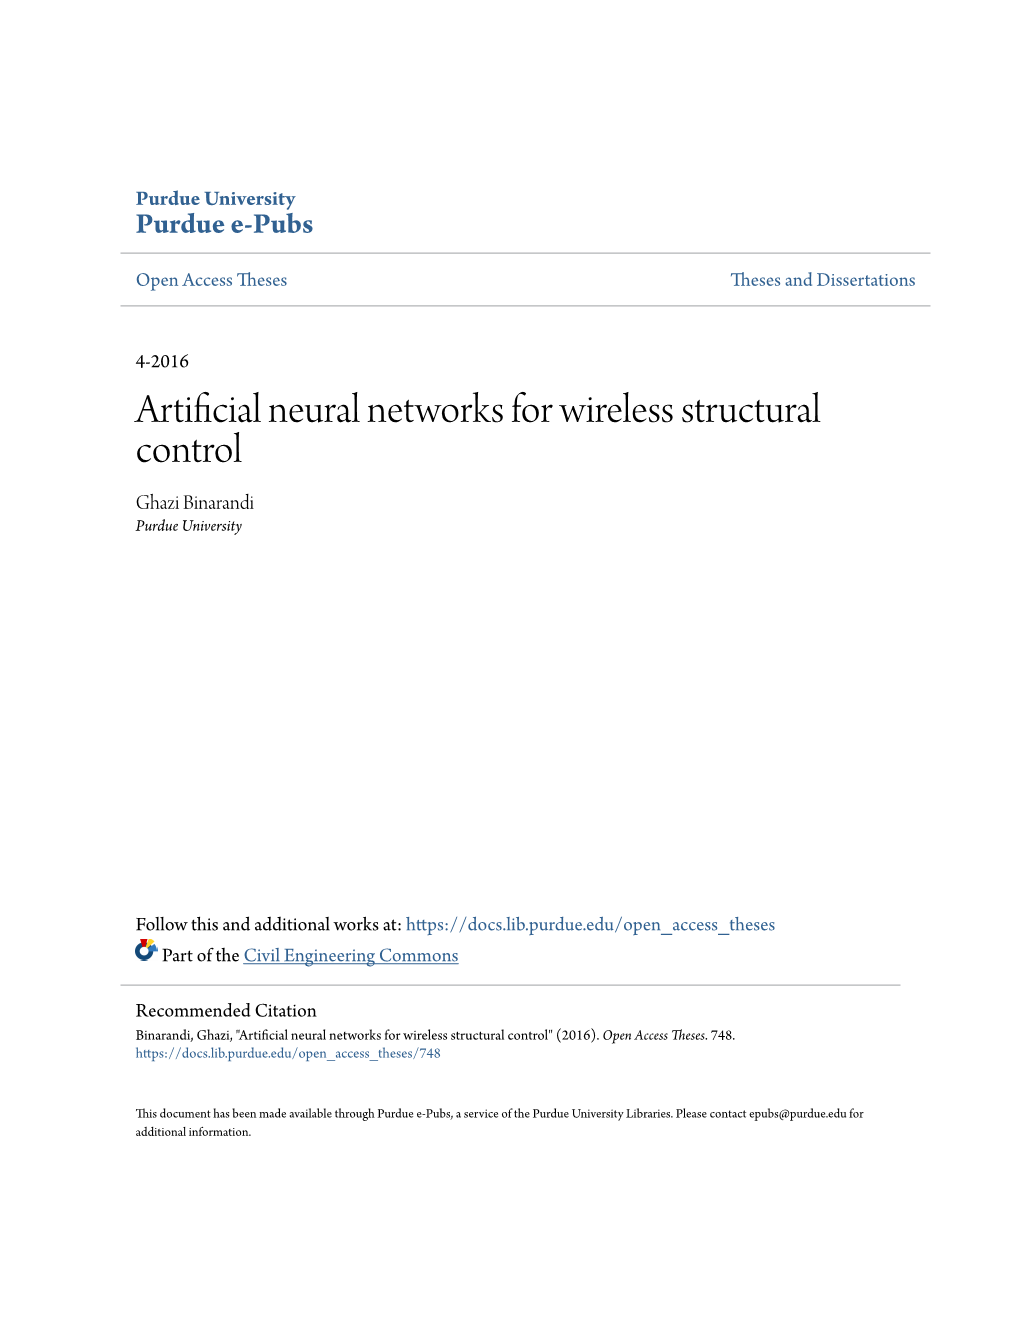 Artificial Neural Networks for Wireless Structural Control Ghazi Binarandi Purdue University